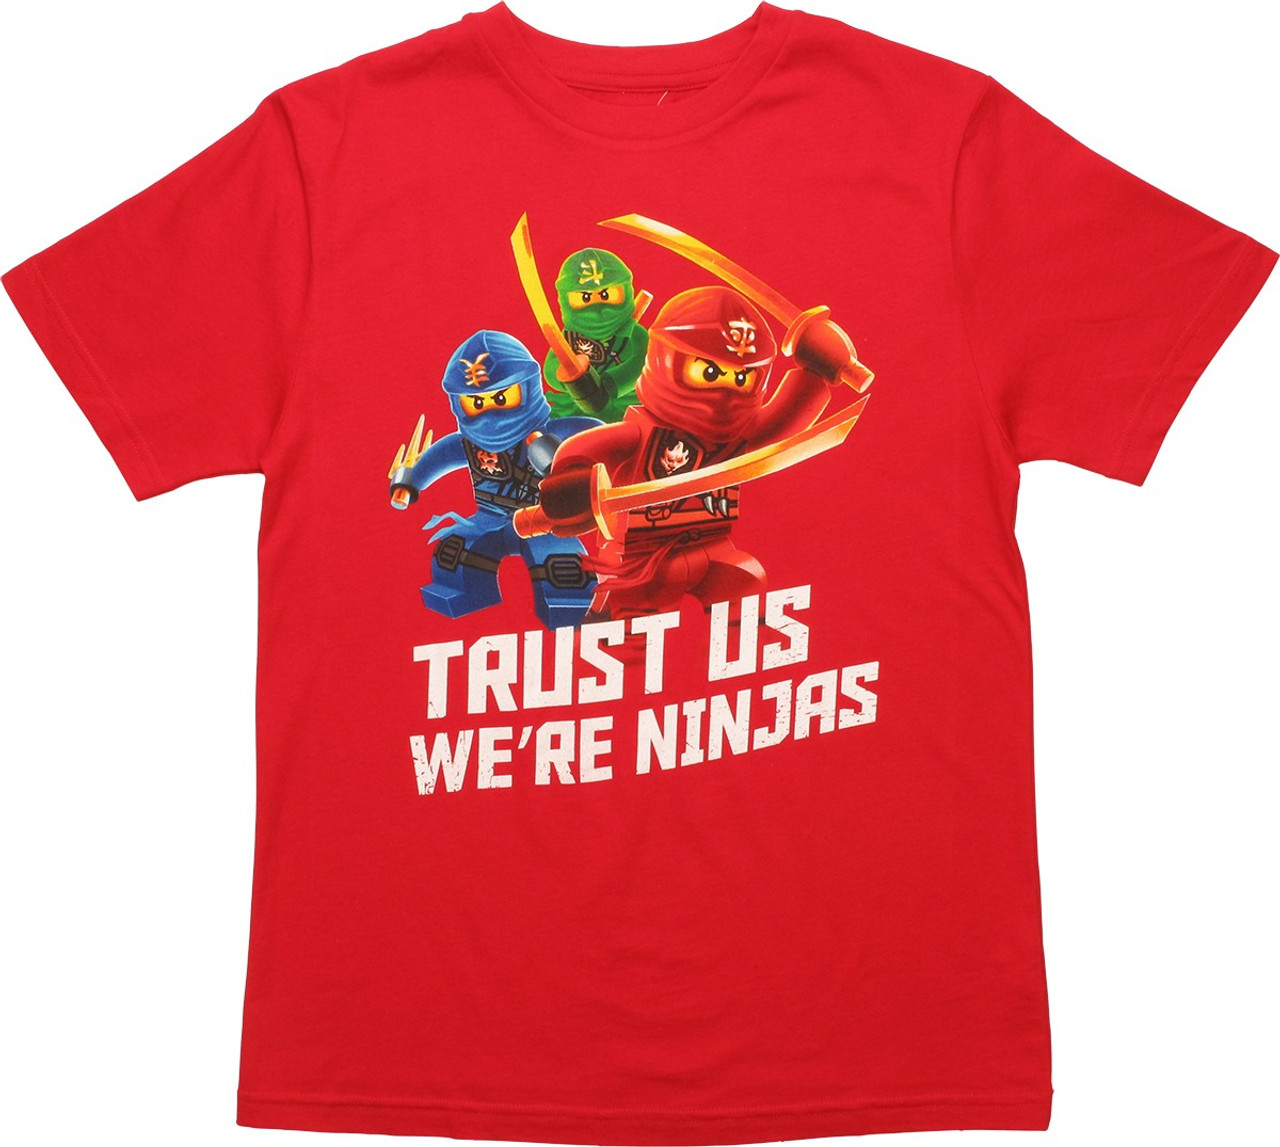 Lego Ninjago Trust Us Ninjas Youth T-Shirt